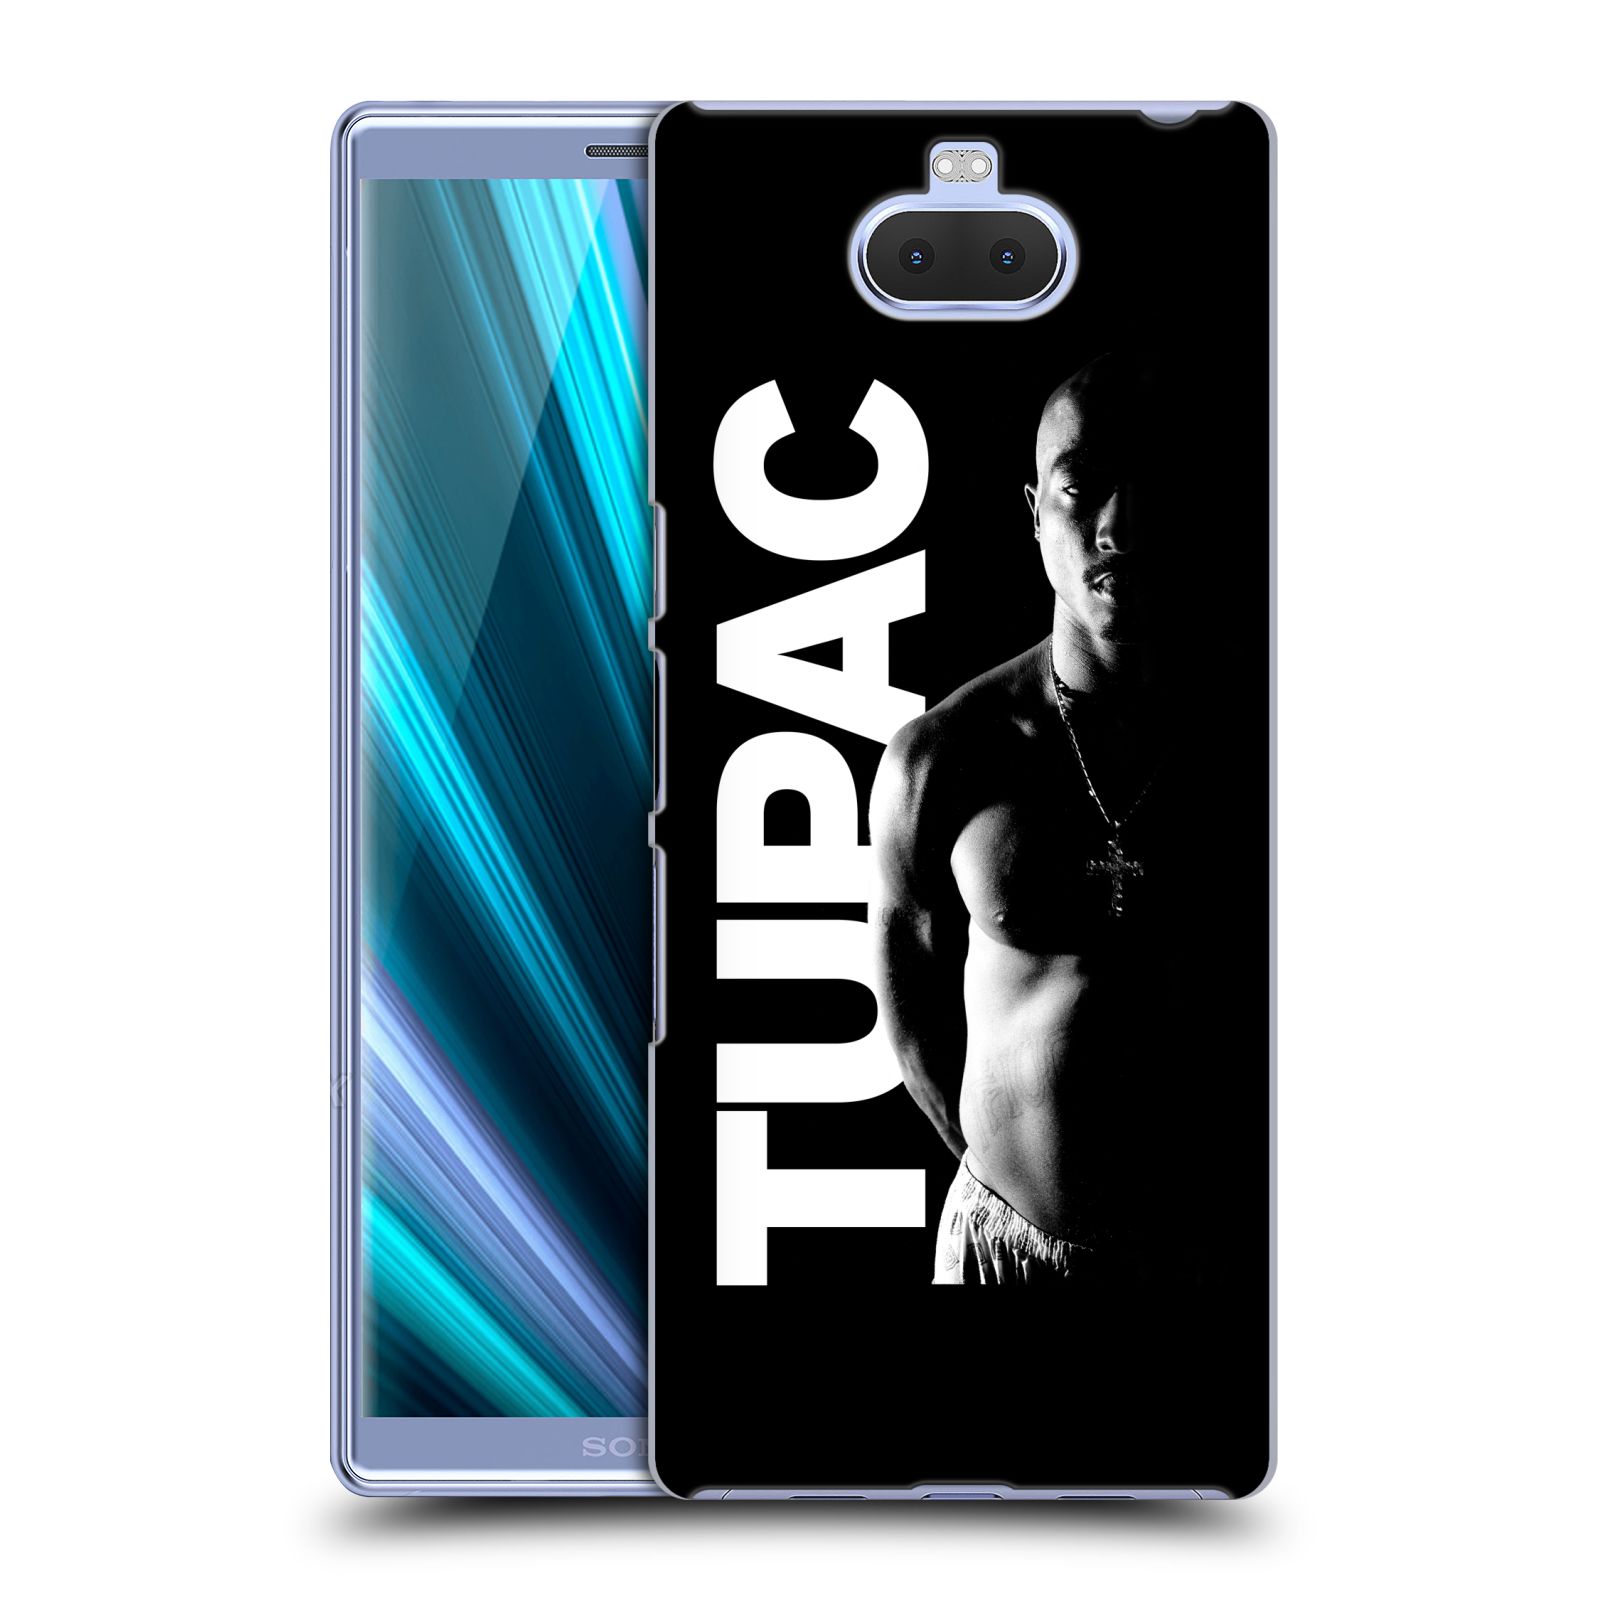 Pouzdro na mobil Sony Xperia 10 Plus - Head Case - Zpěvák rapper Tupac Shakur 2Pac bílý nadpis